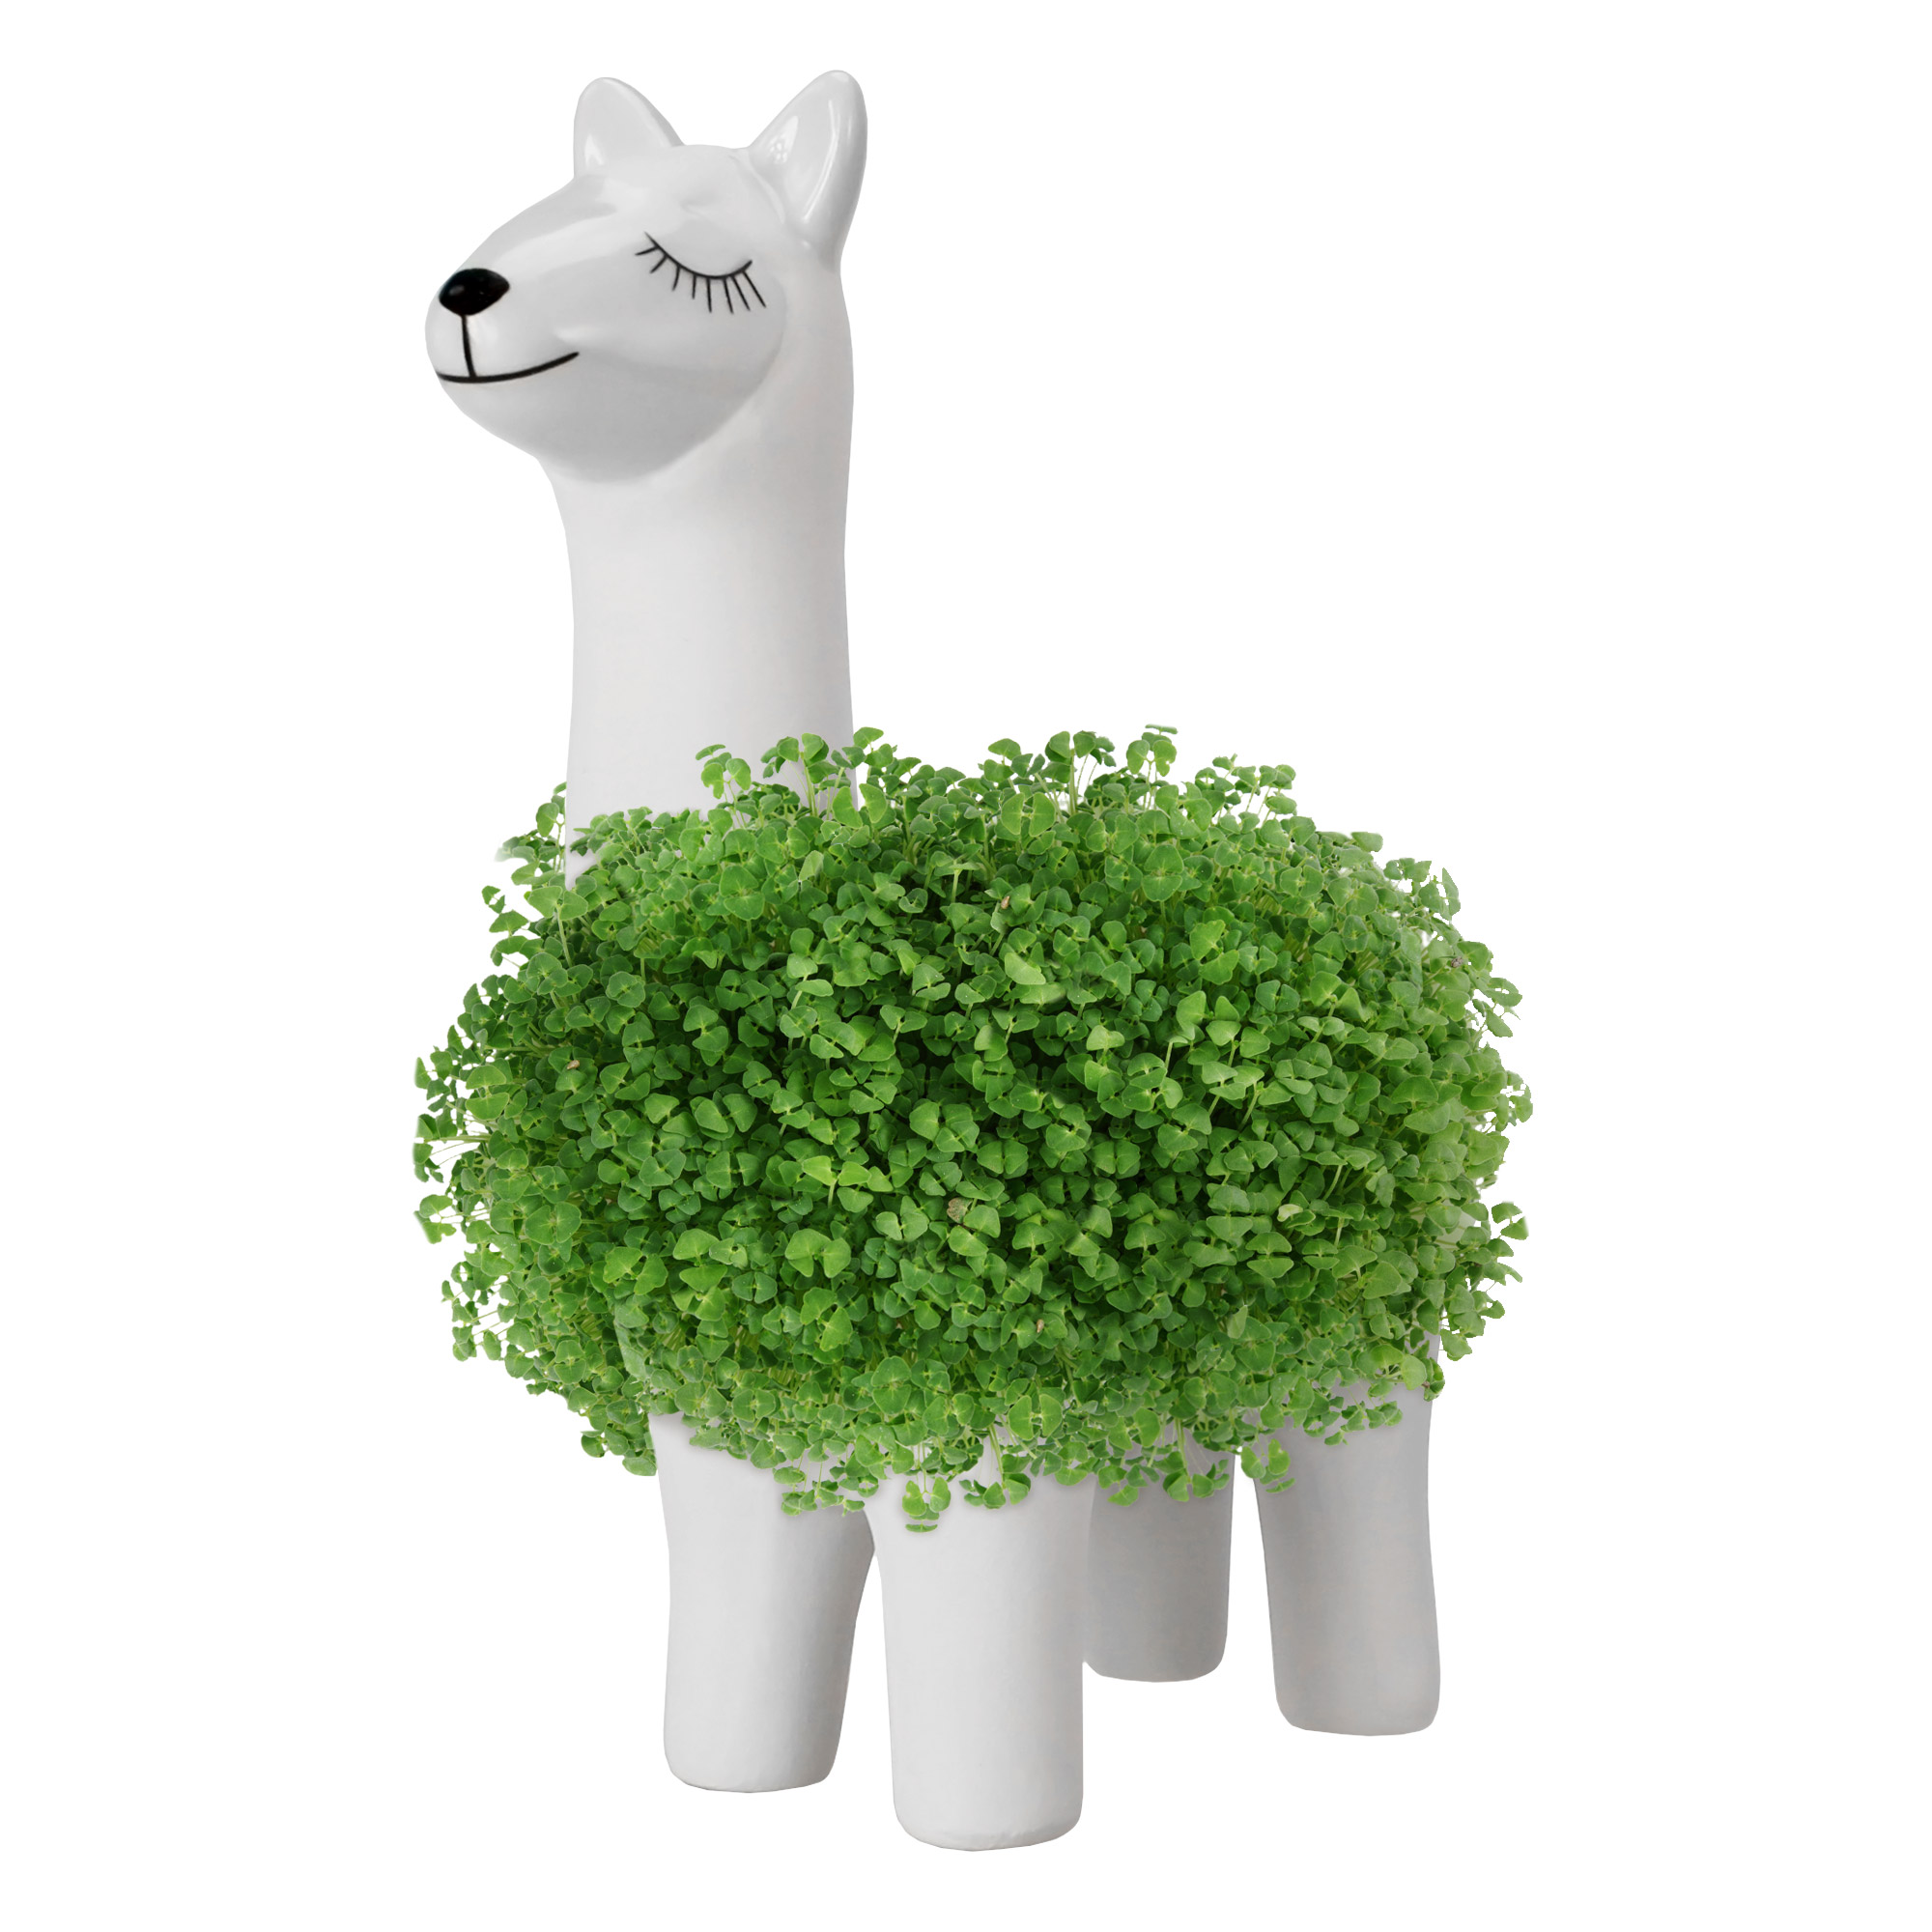 Green Lama Pflanztier - Chia Samen Pflanzgefäß